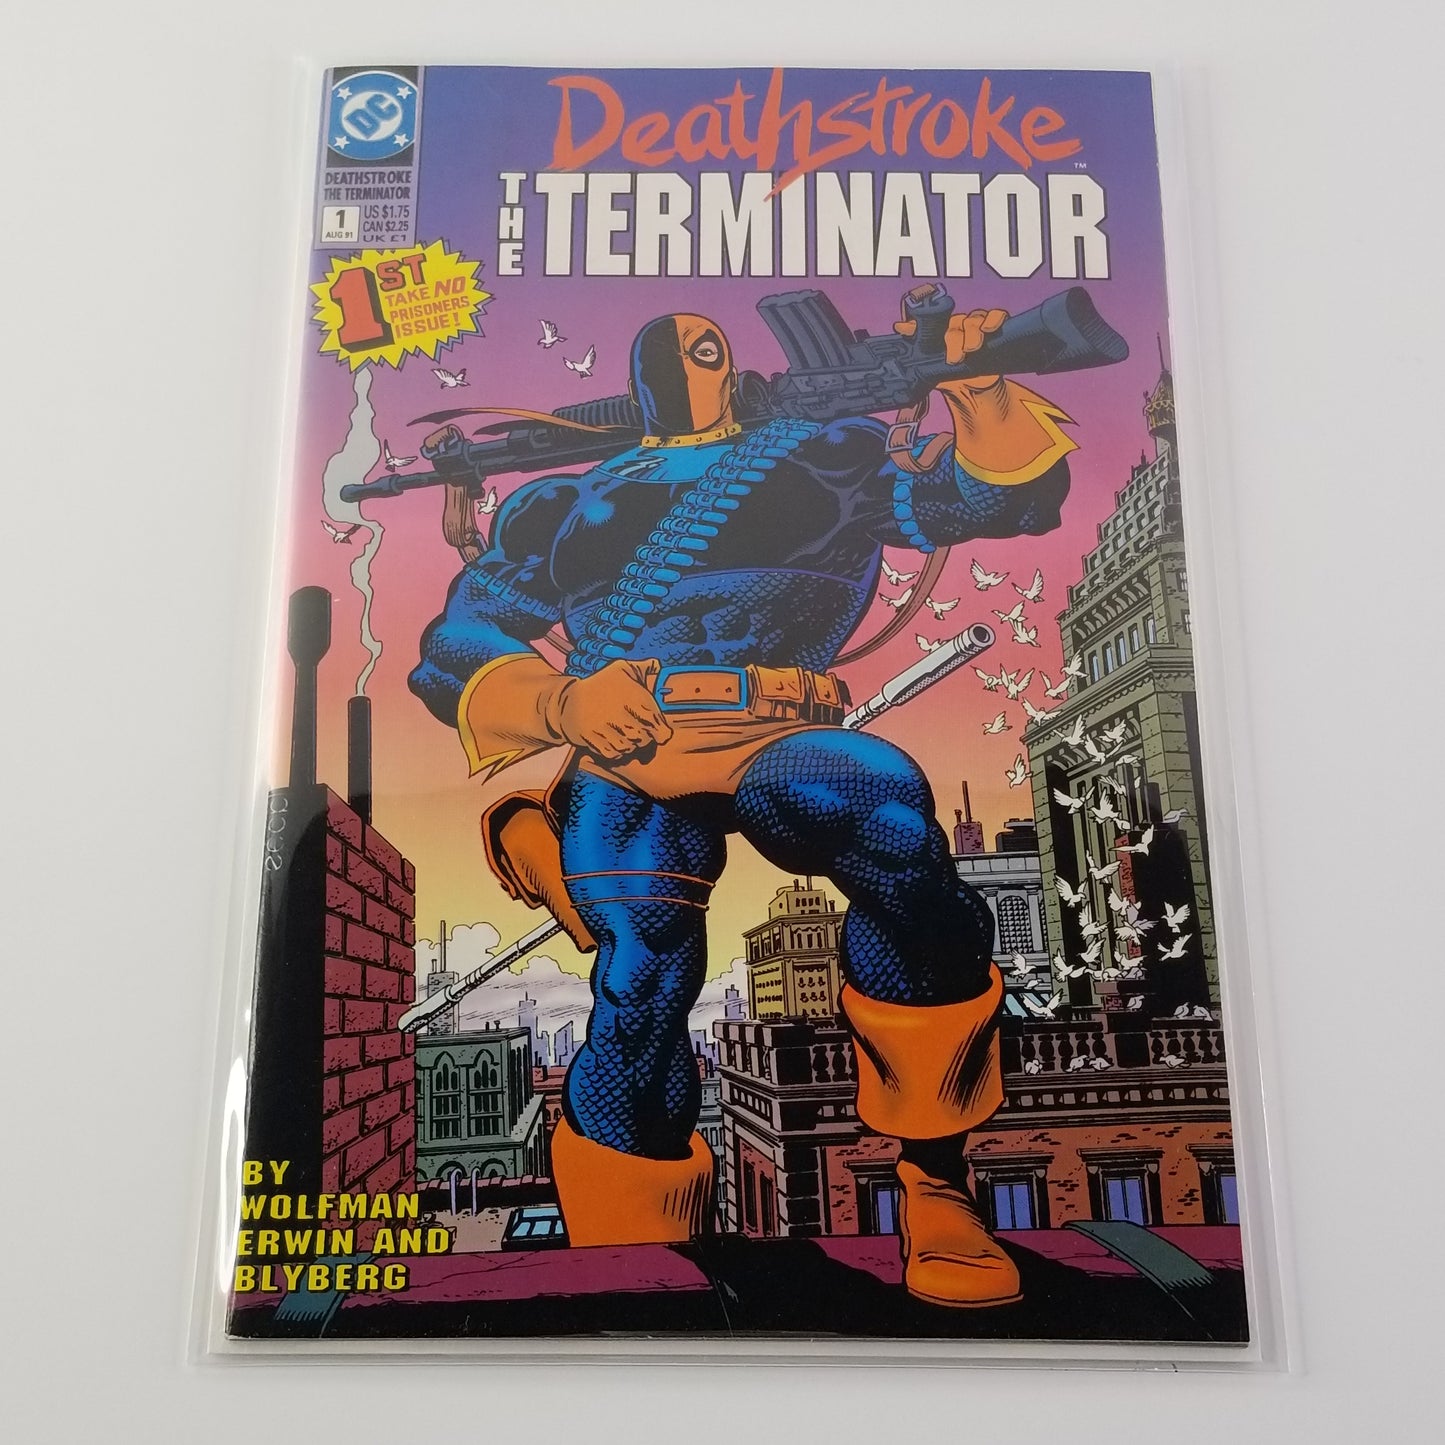 Deathstroke the Terminator (DC, 1991) #1